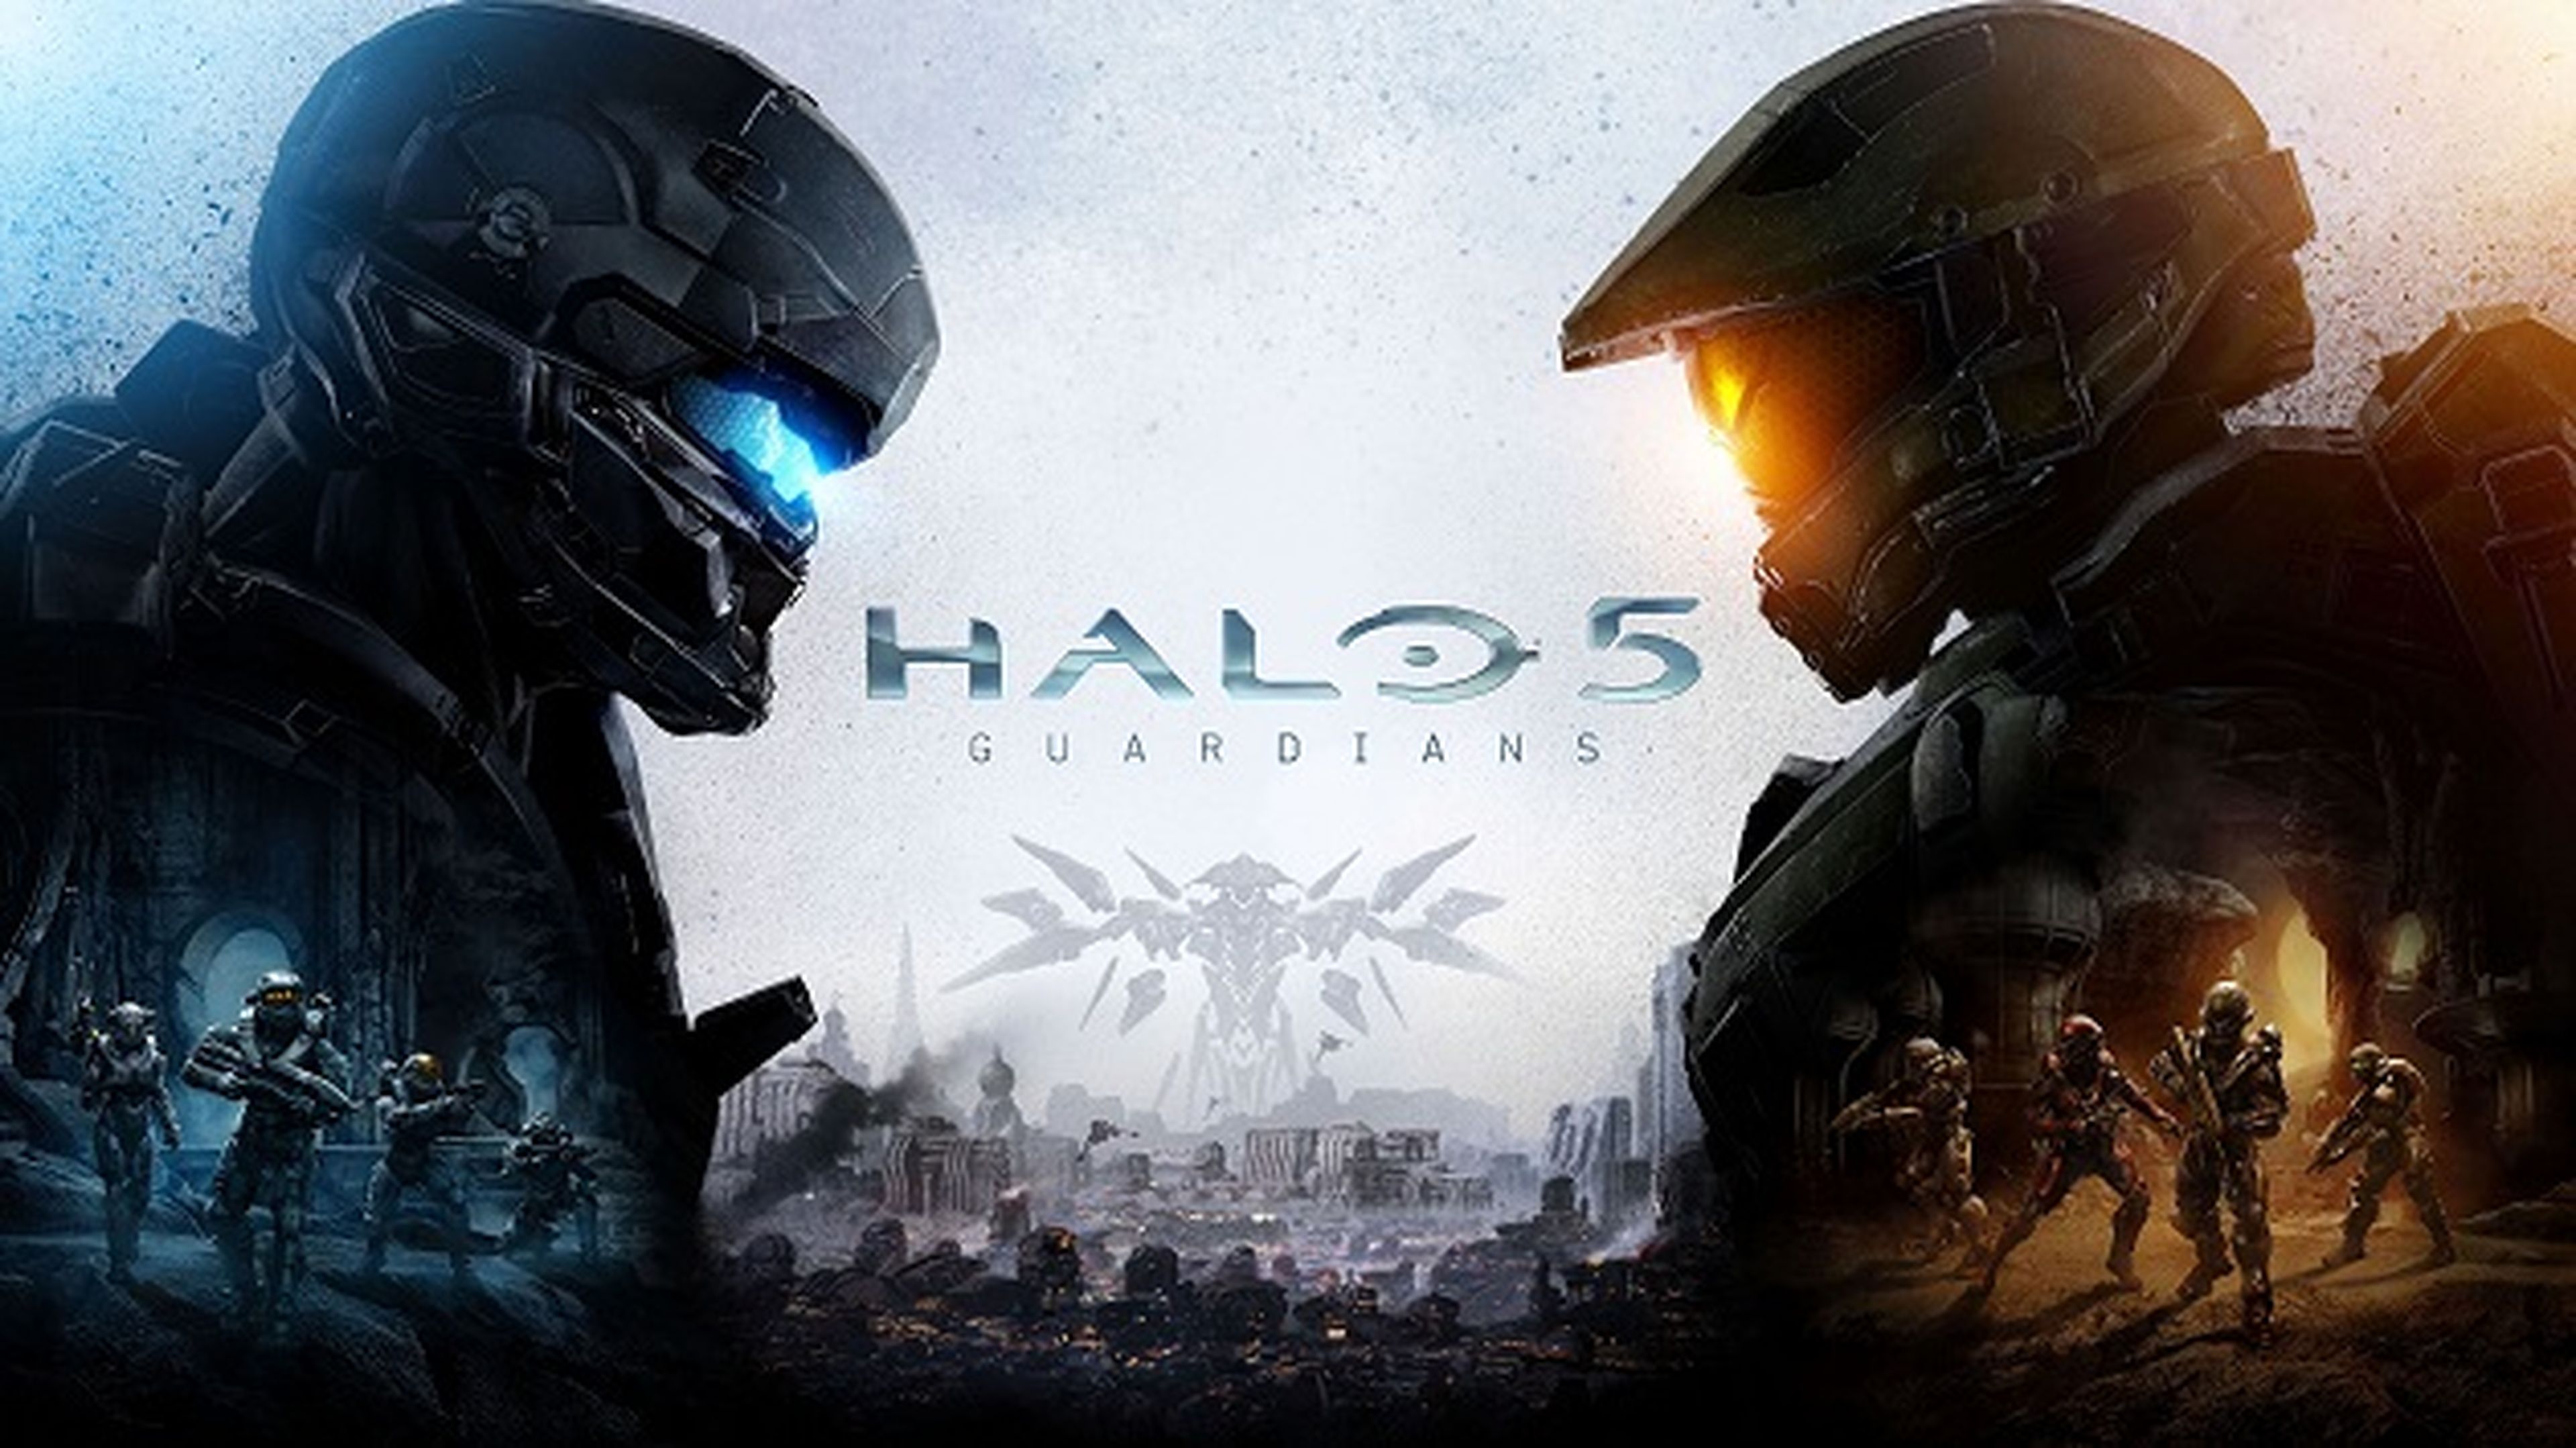 Halo 5: Guardians revela su portada definitiva